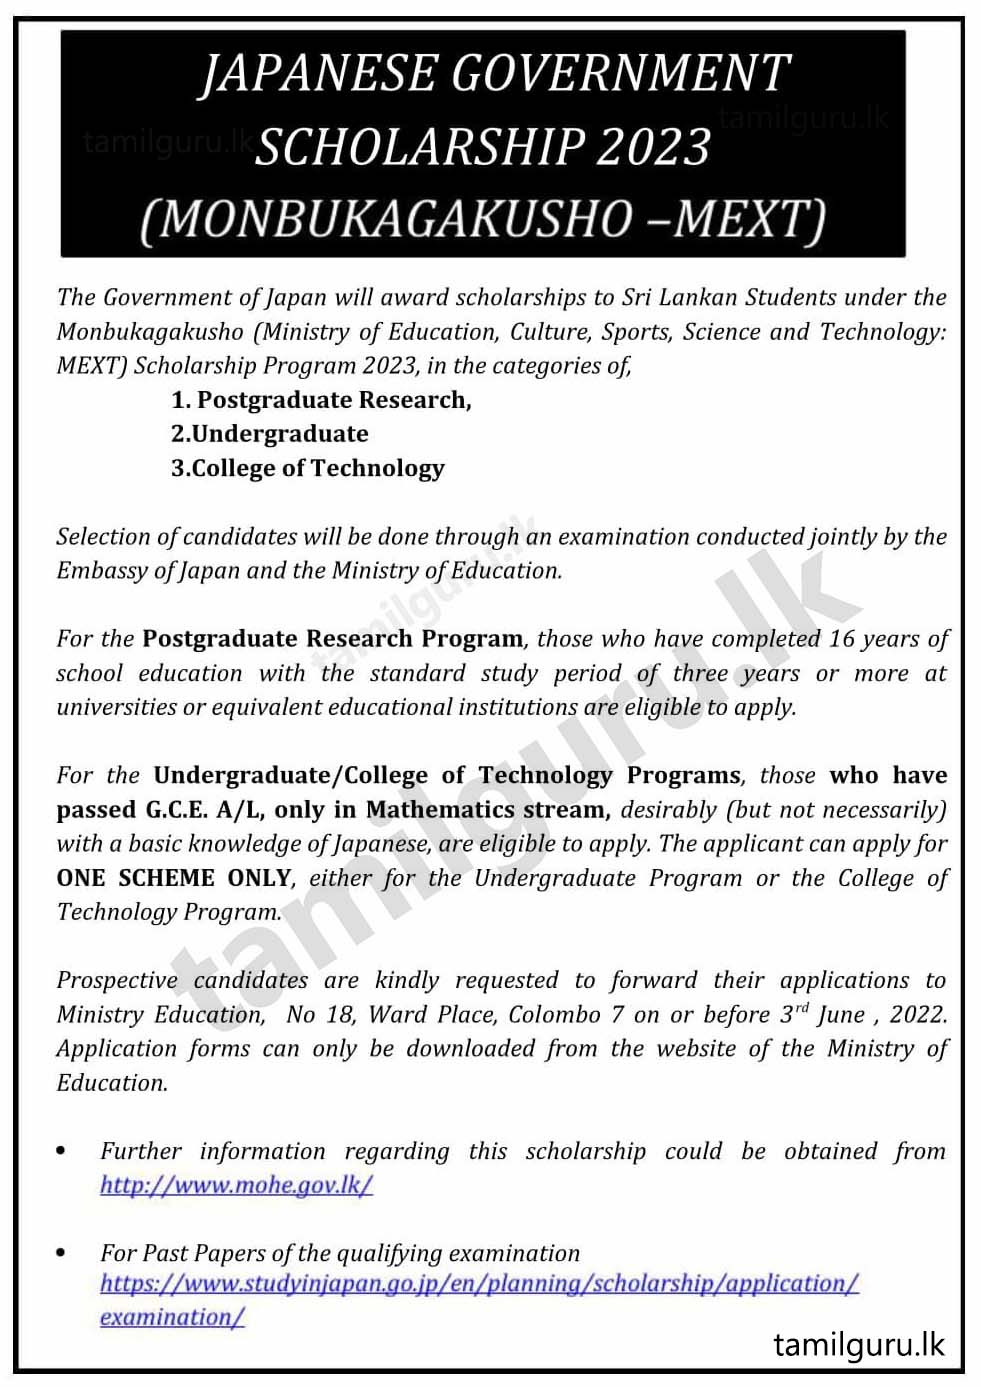 Calling Applications for Japanese Government (Monbukagakusho - MEXT) Scholarships Programme 2023 for Sri Lankan Students